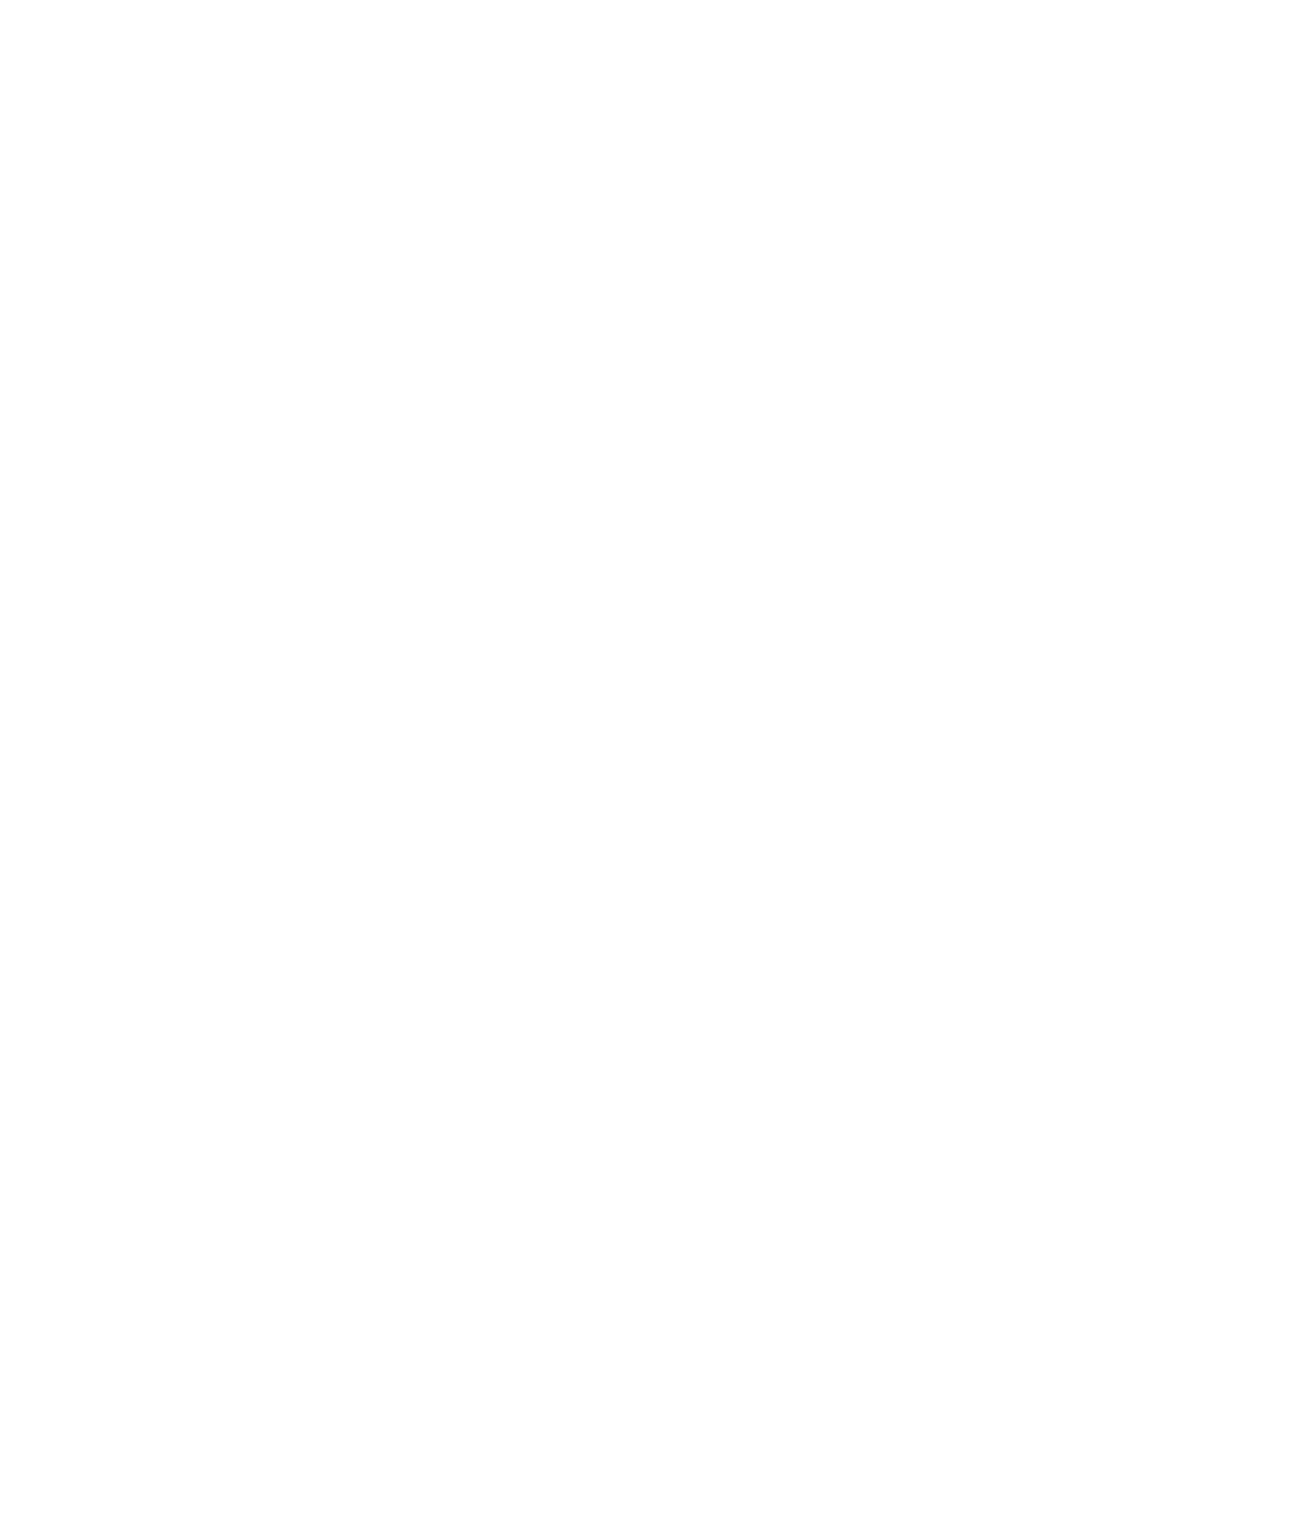 Knights Group logo pour fonds sombres (PNG transparent)